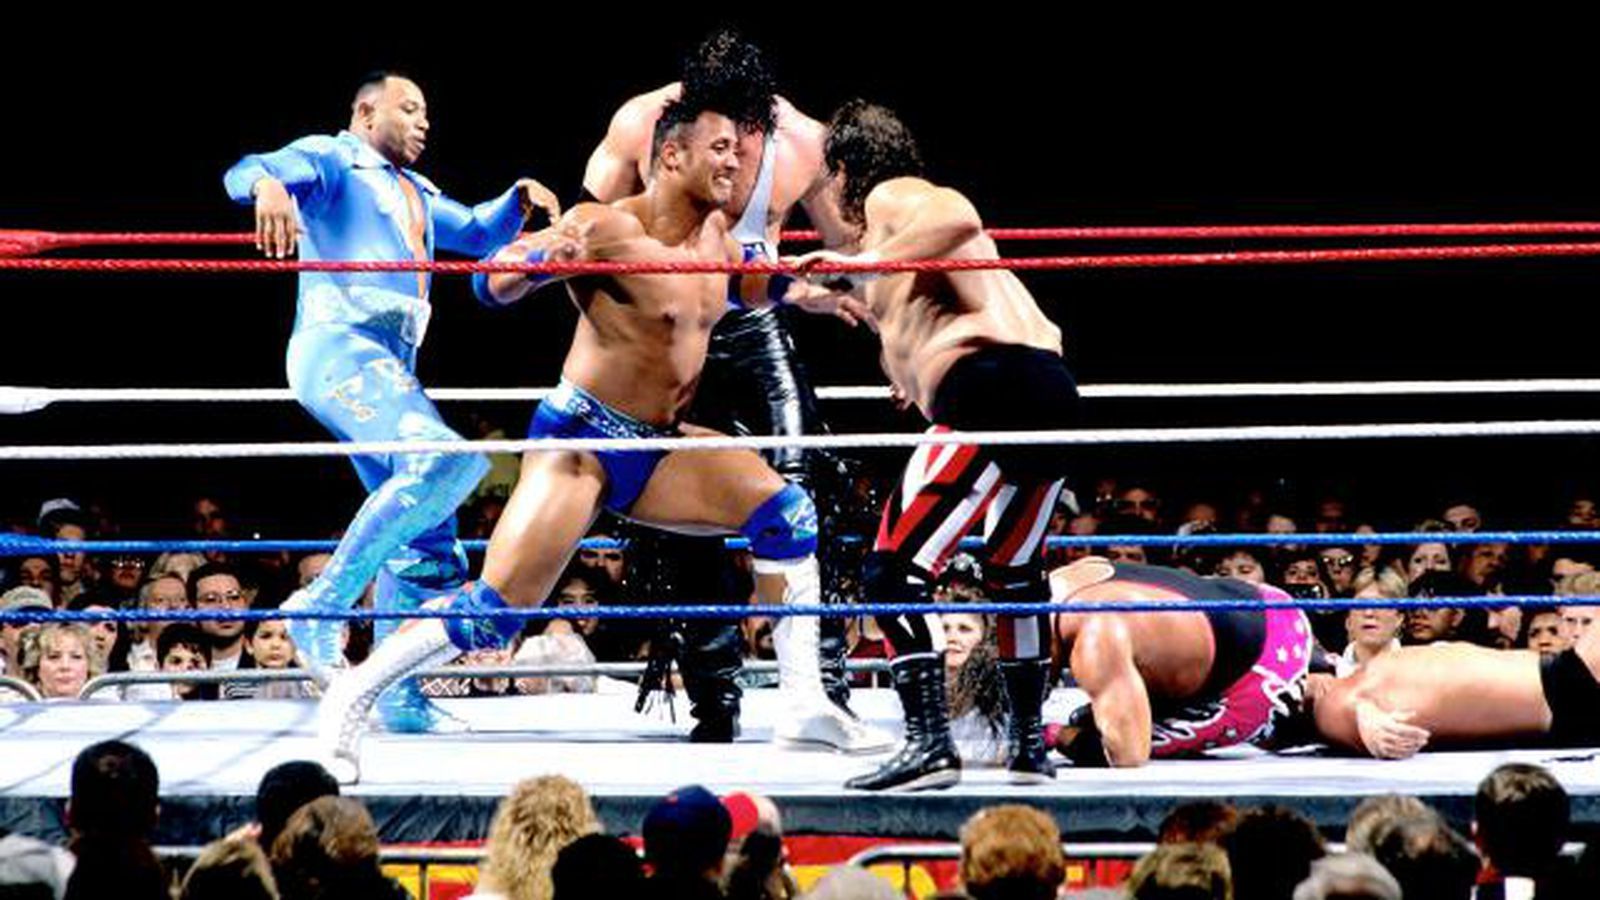 The 1997 Royal Rumble